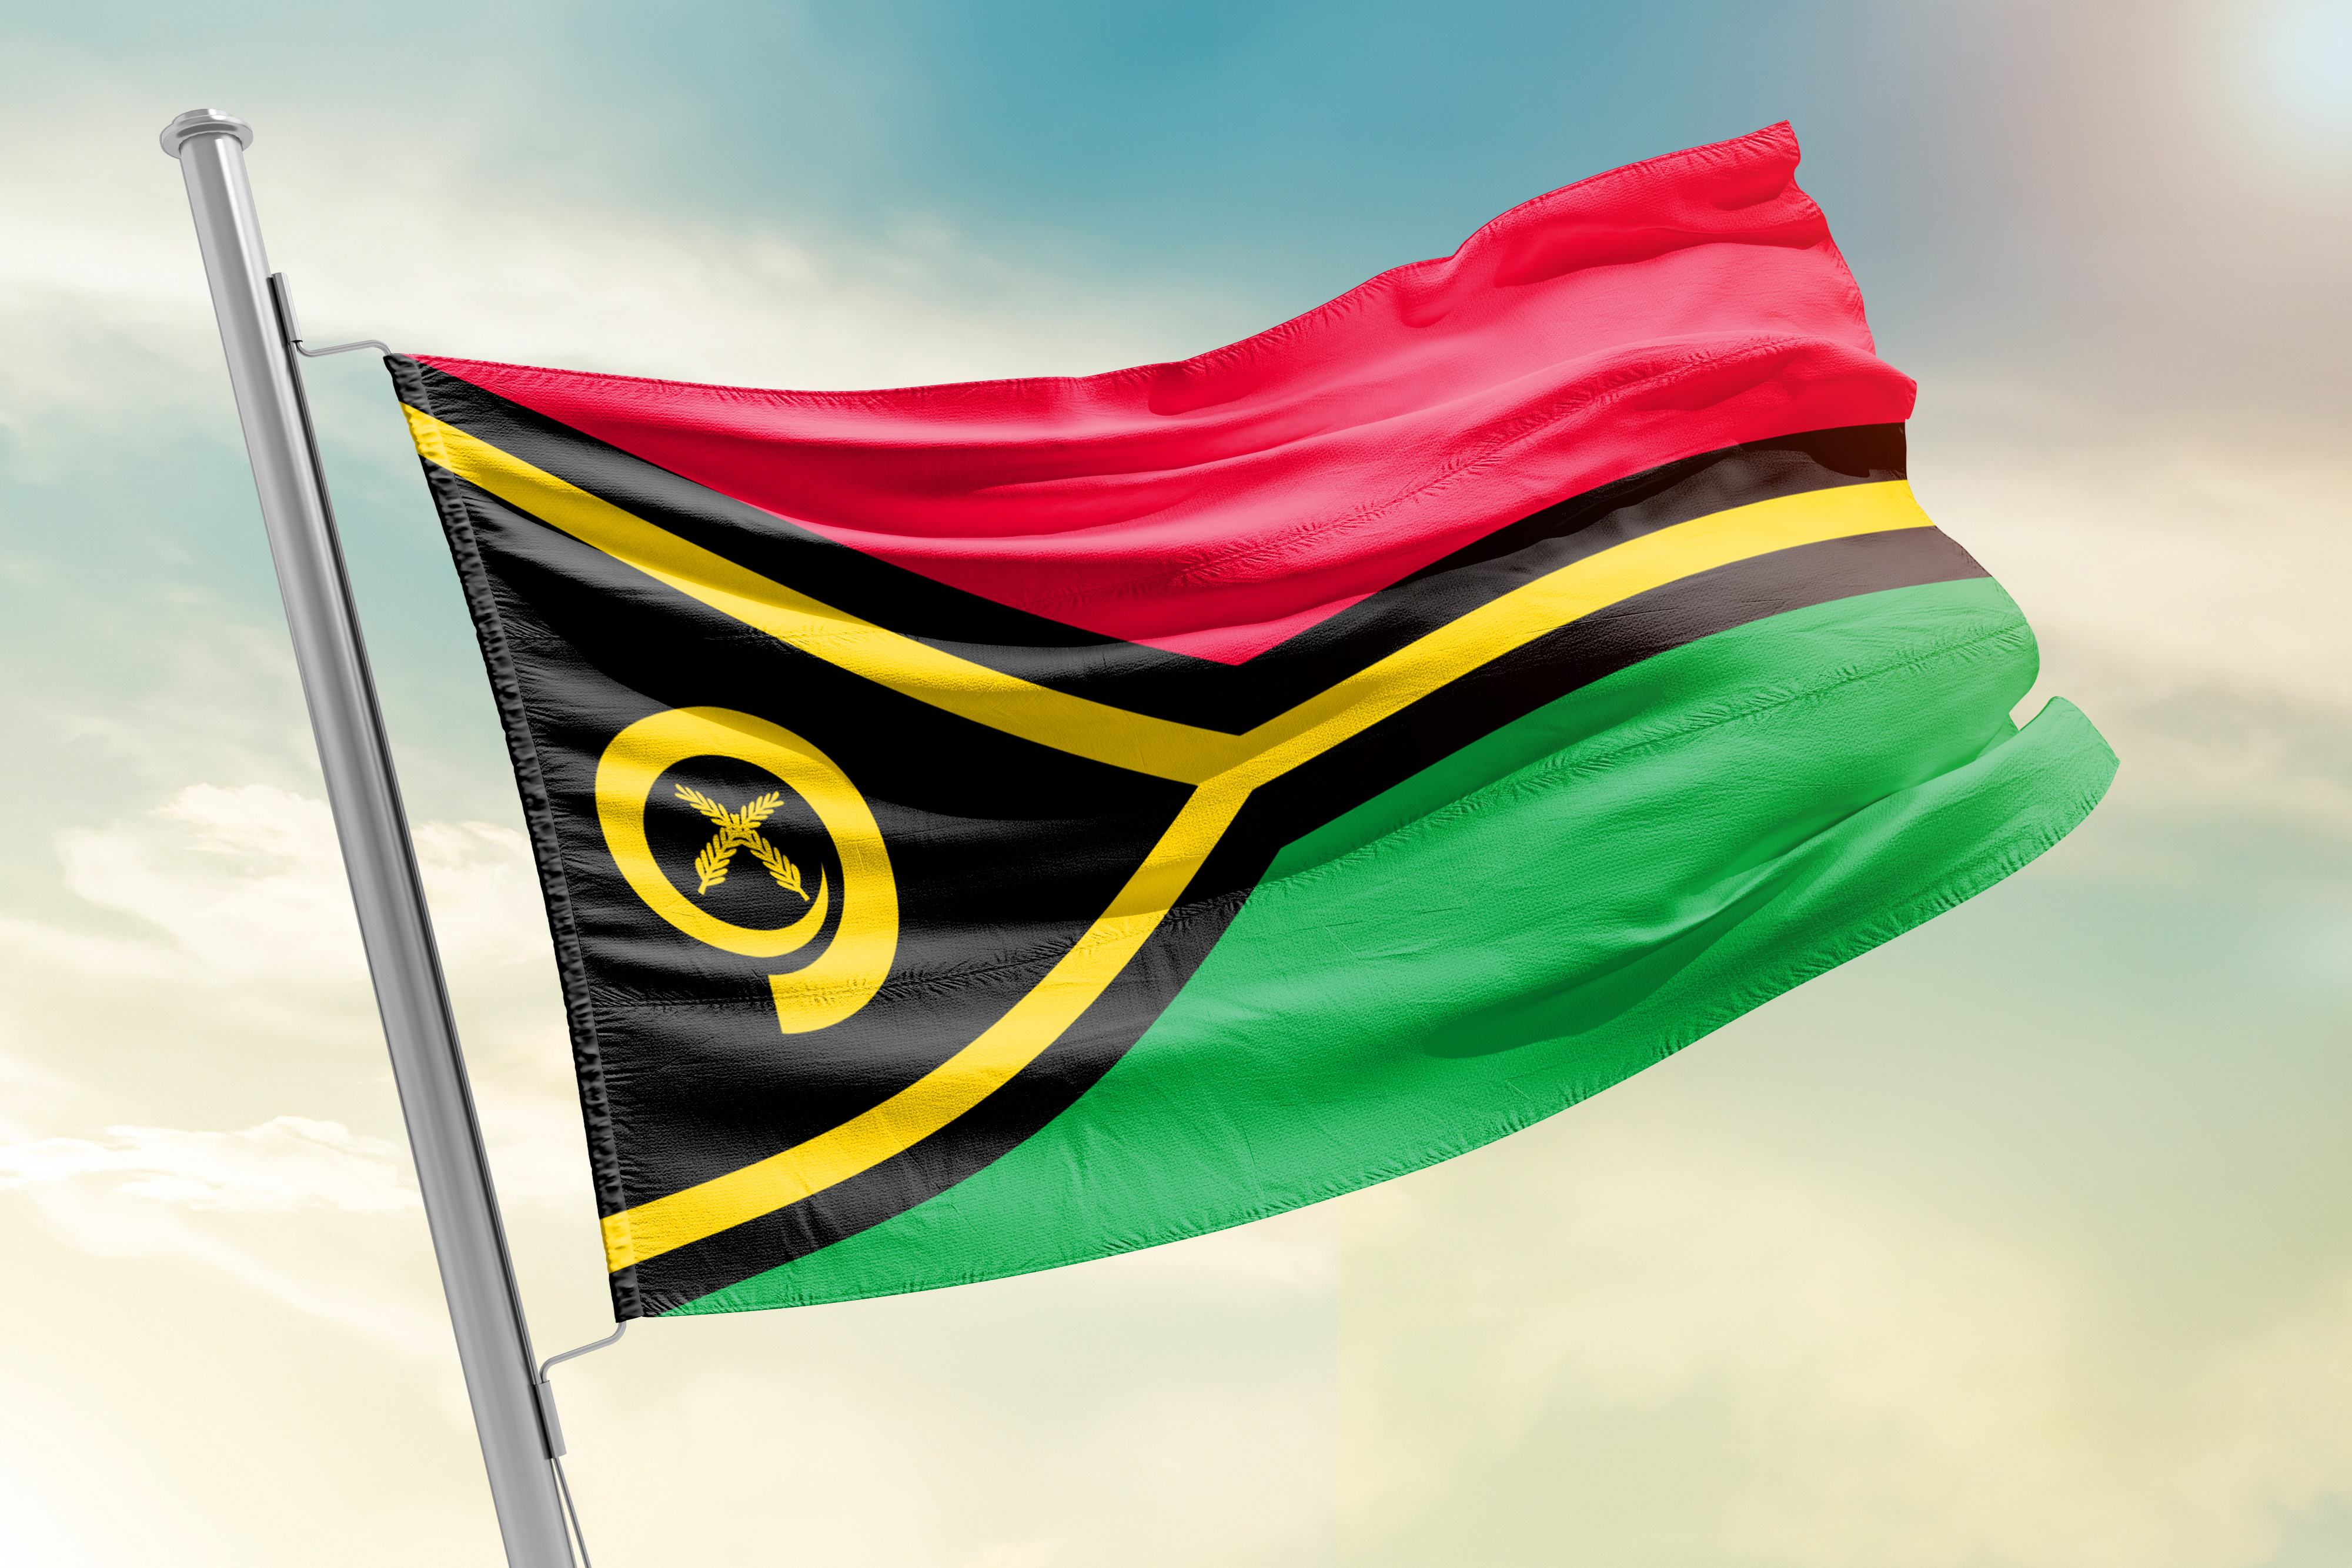 The flag symbolizes Vanuatu citizenship by investment